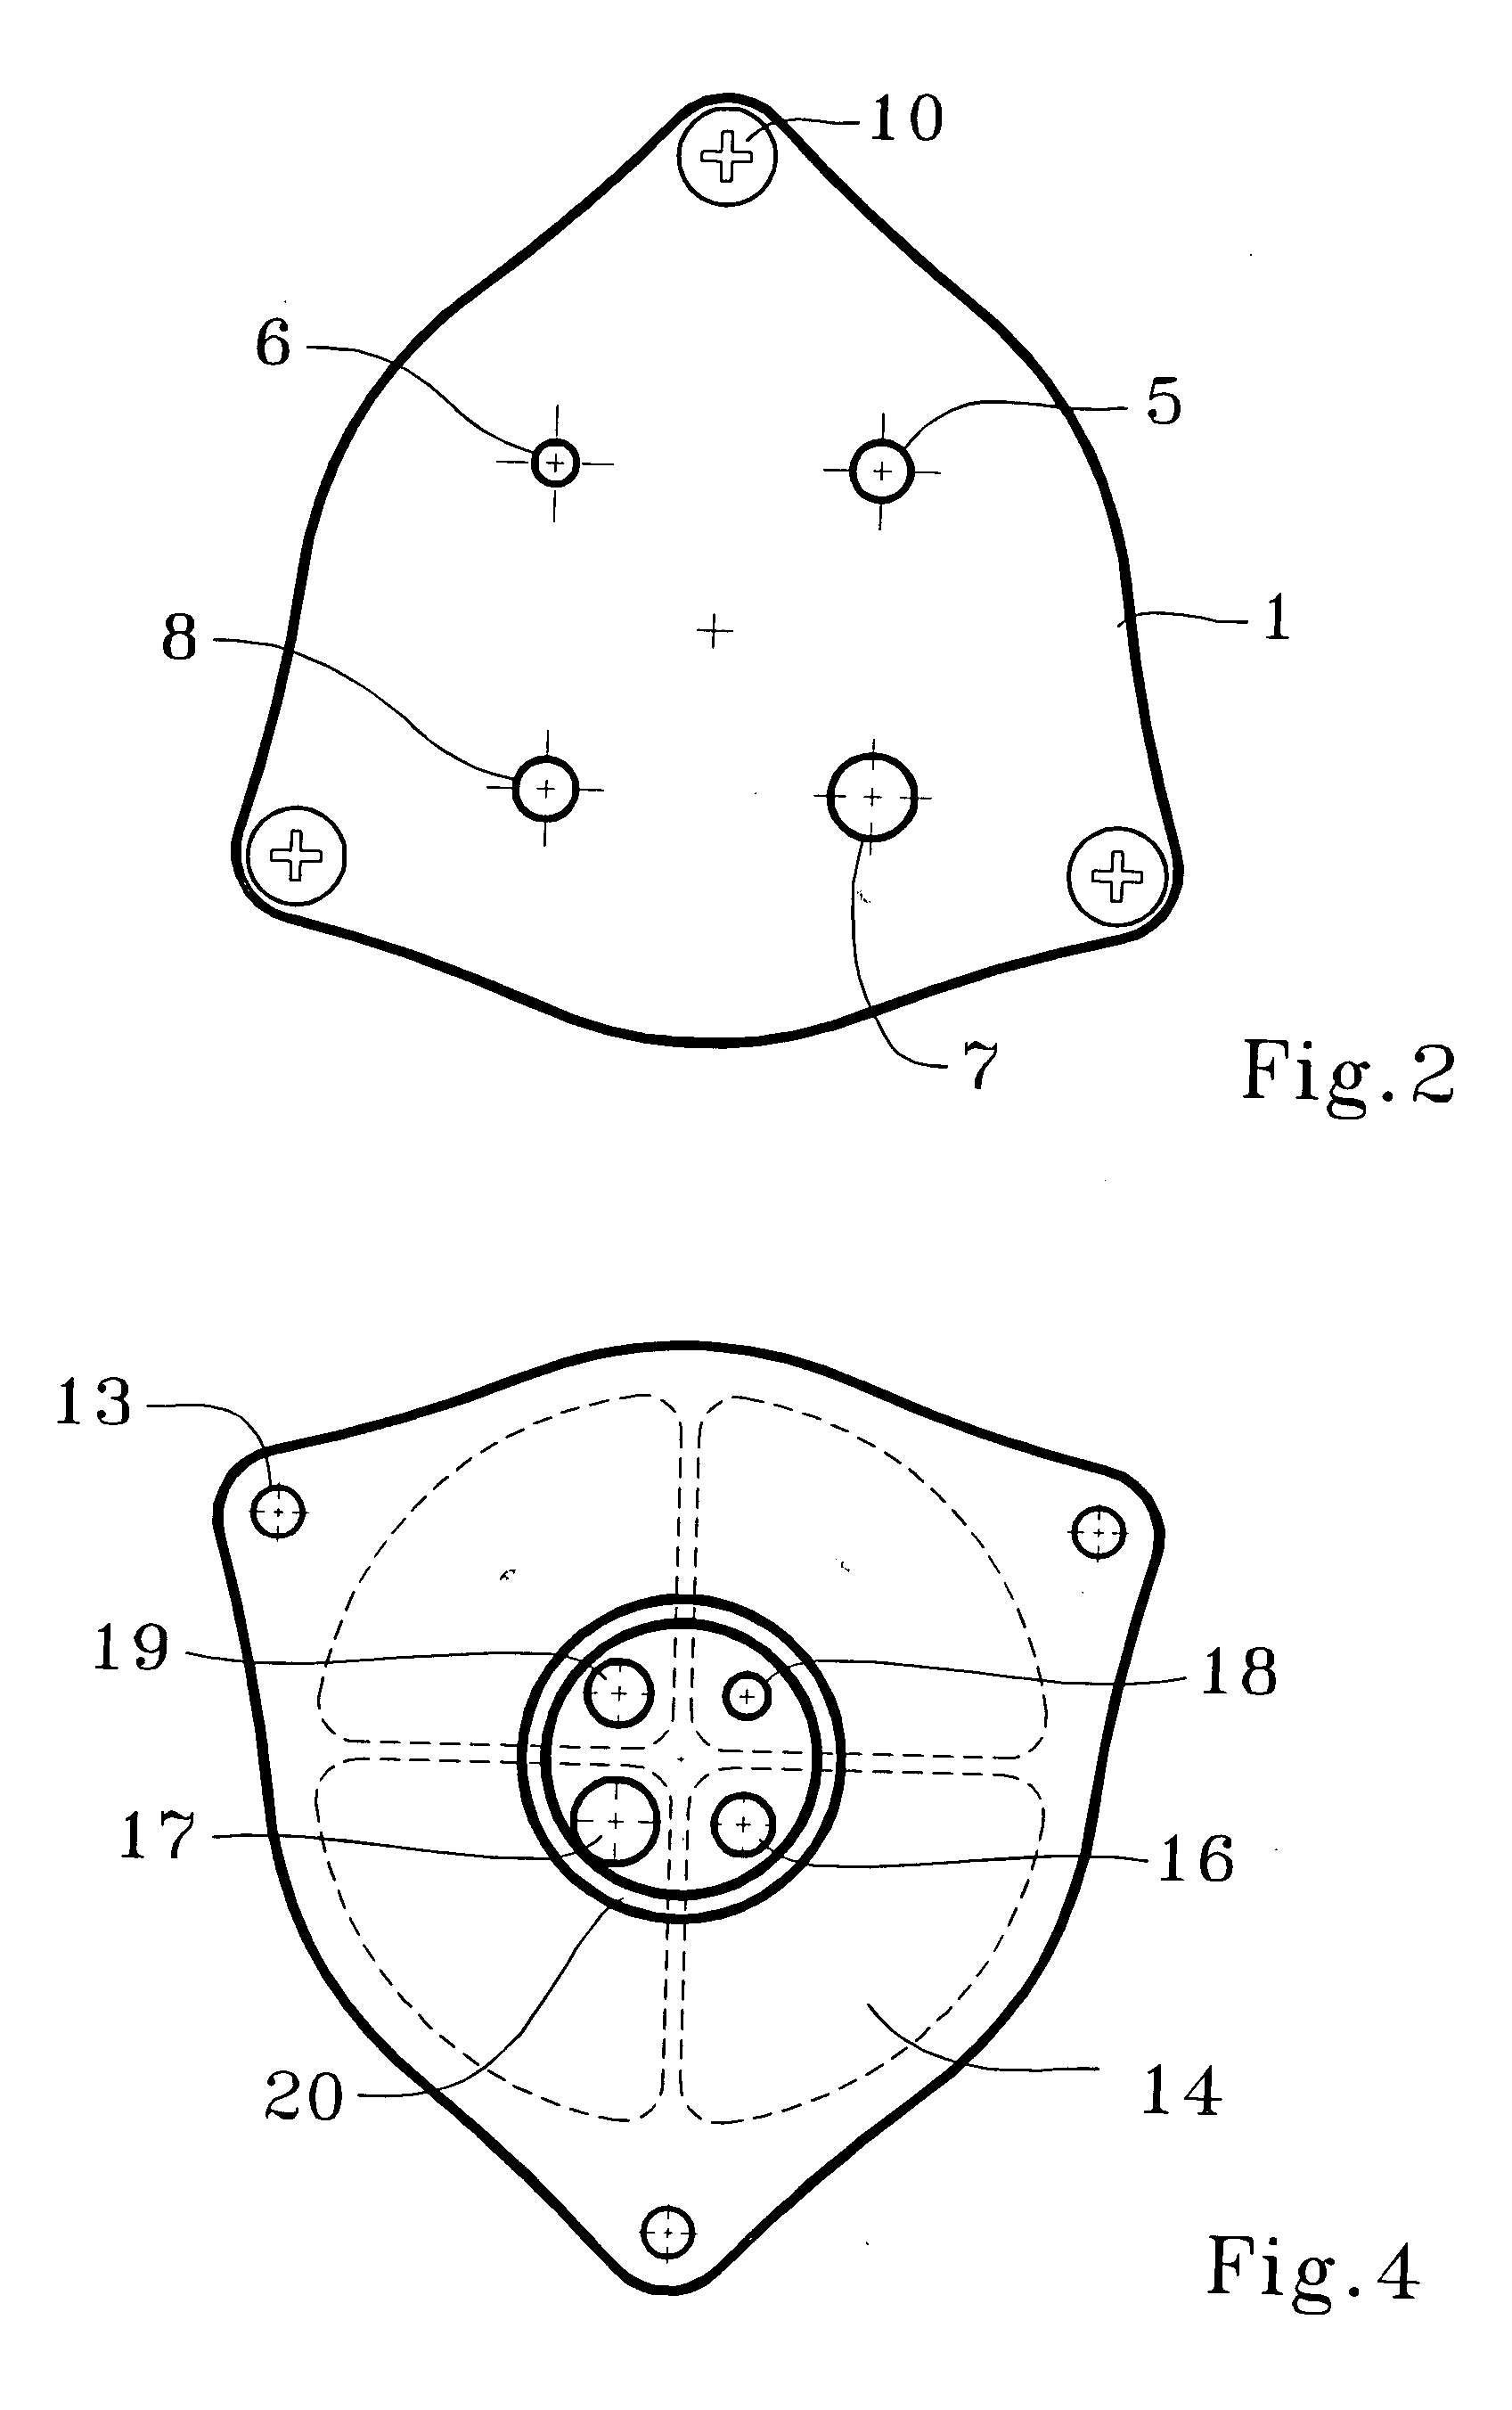 Air sampler with parallel impactors